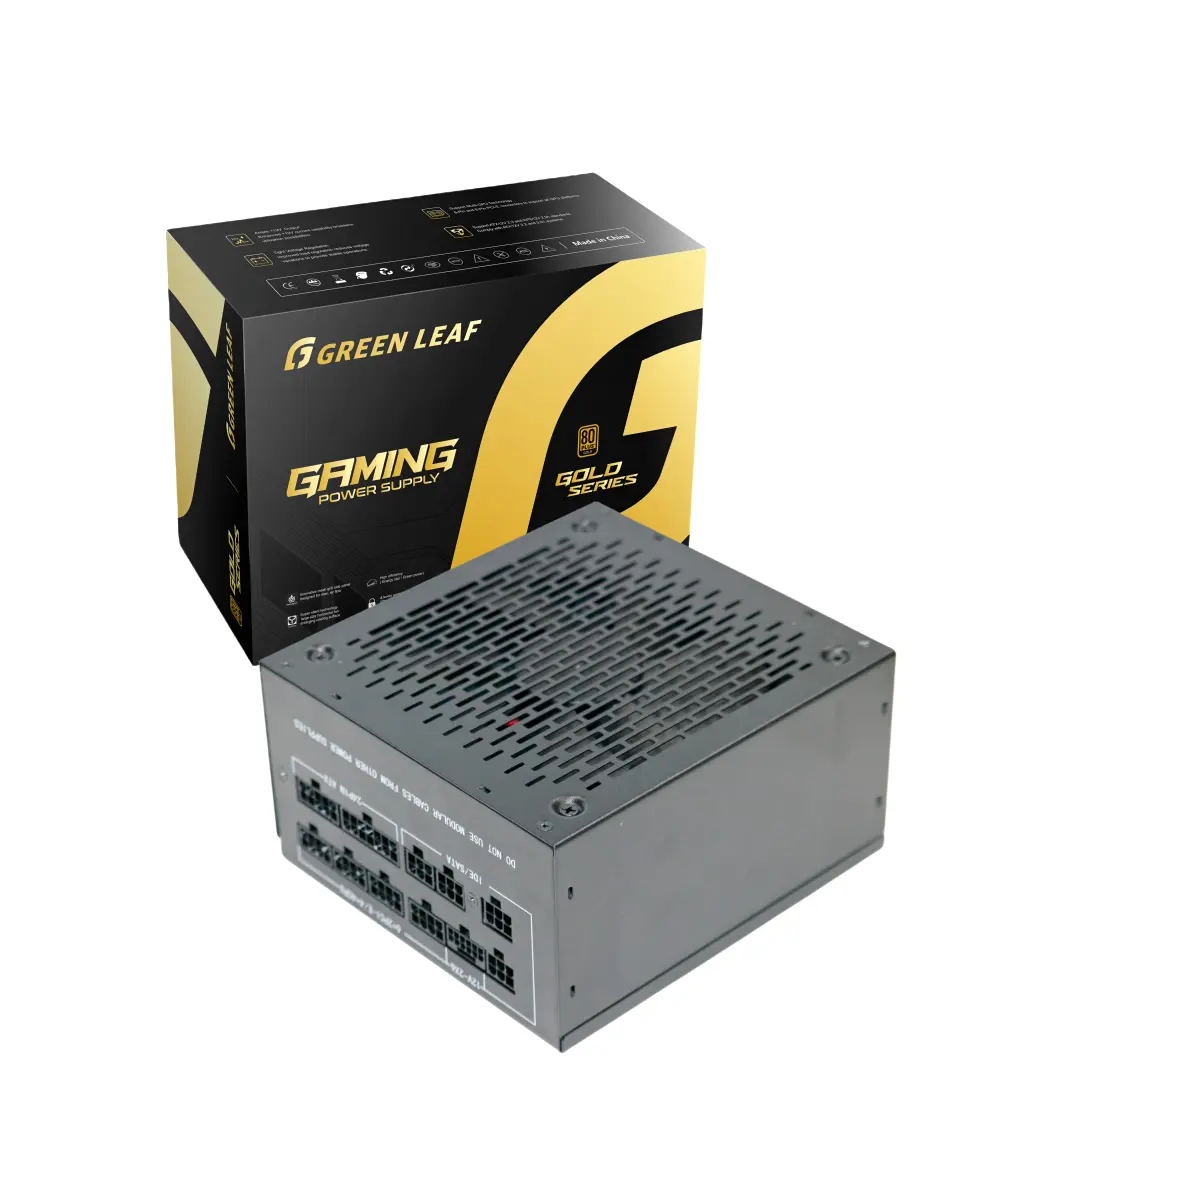 OEM ปรับแต่ง ATX 3.0 5.0 PCIe 80 Plus ทองพีซีแหล่งจ่ายไฟ 650W-1250W Full Modular คอมพิวเตอร์เดสก์ท็อปสต็อกเซิร์ฟเวอร์